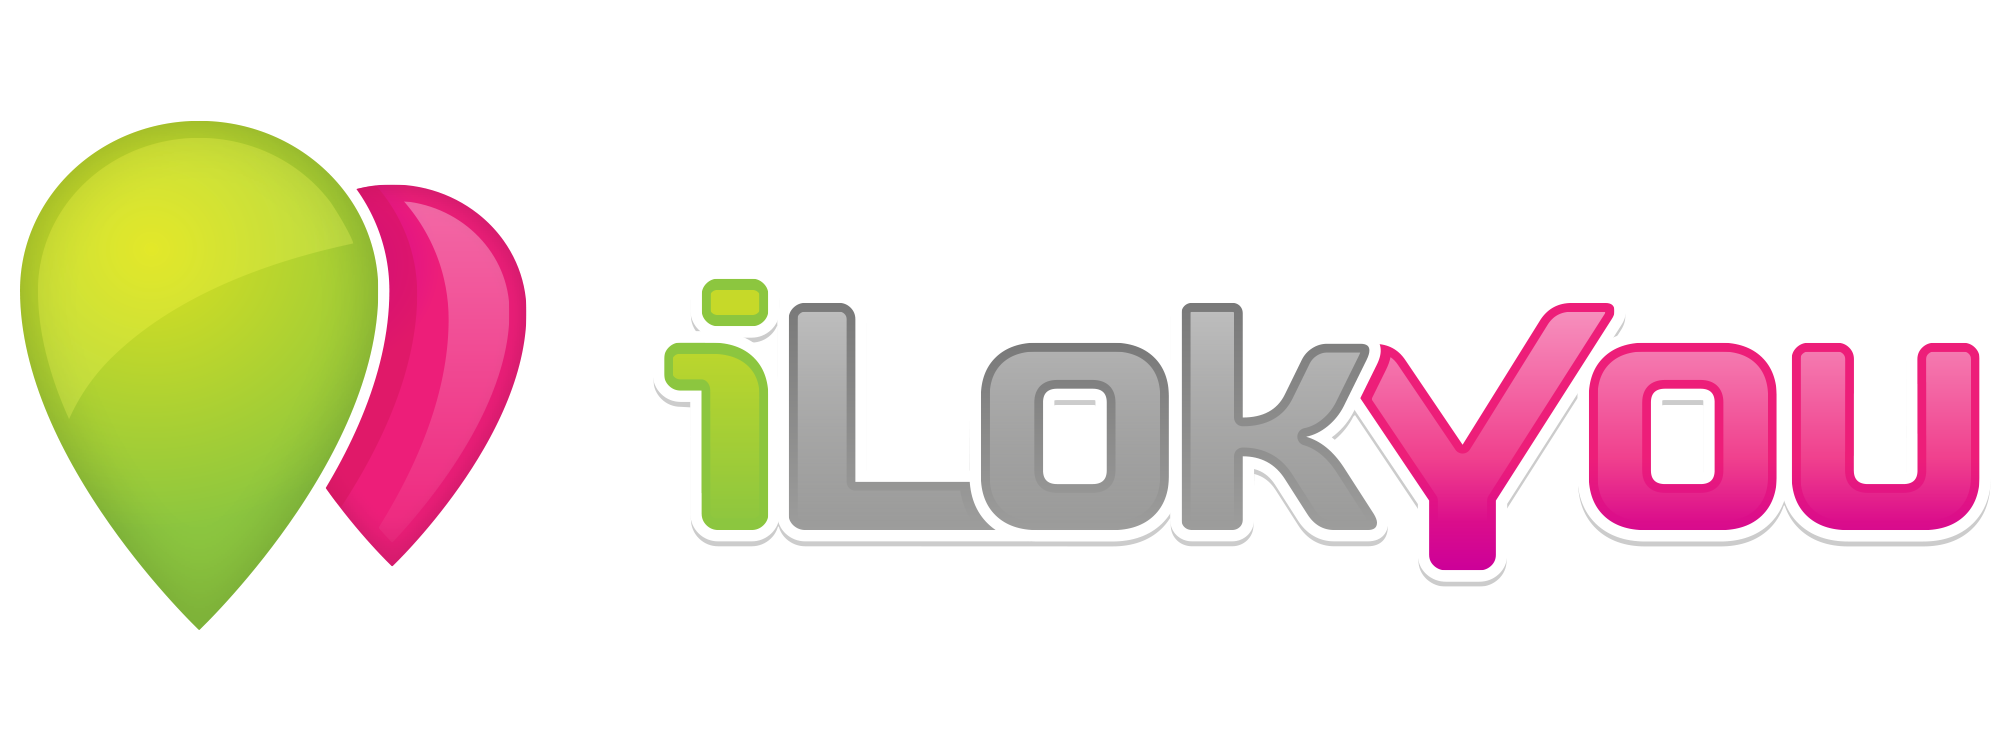 iLokYou_logo_HD